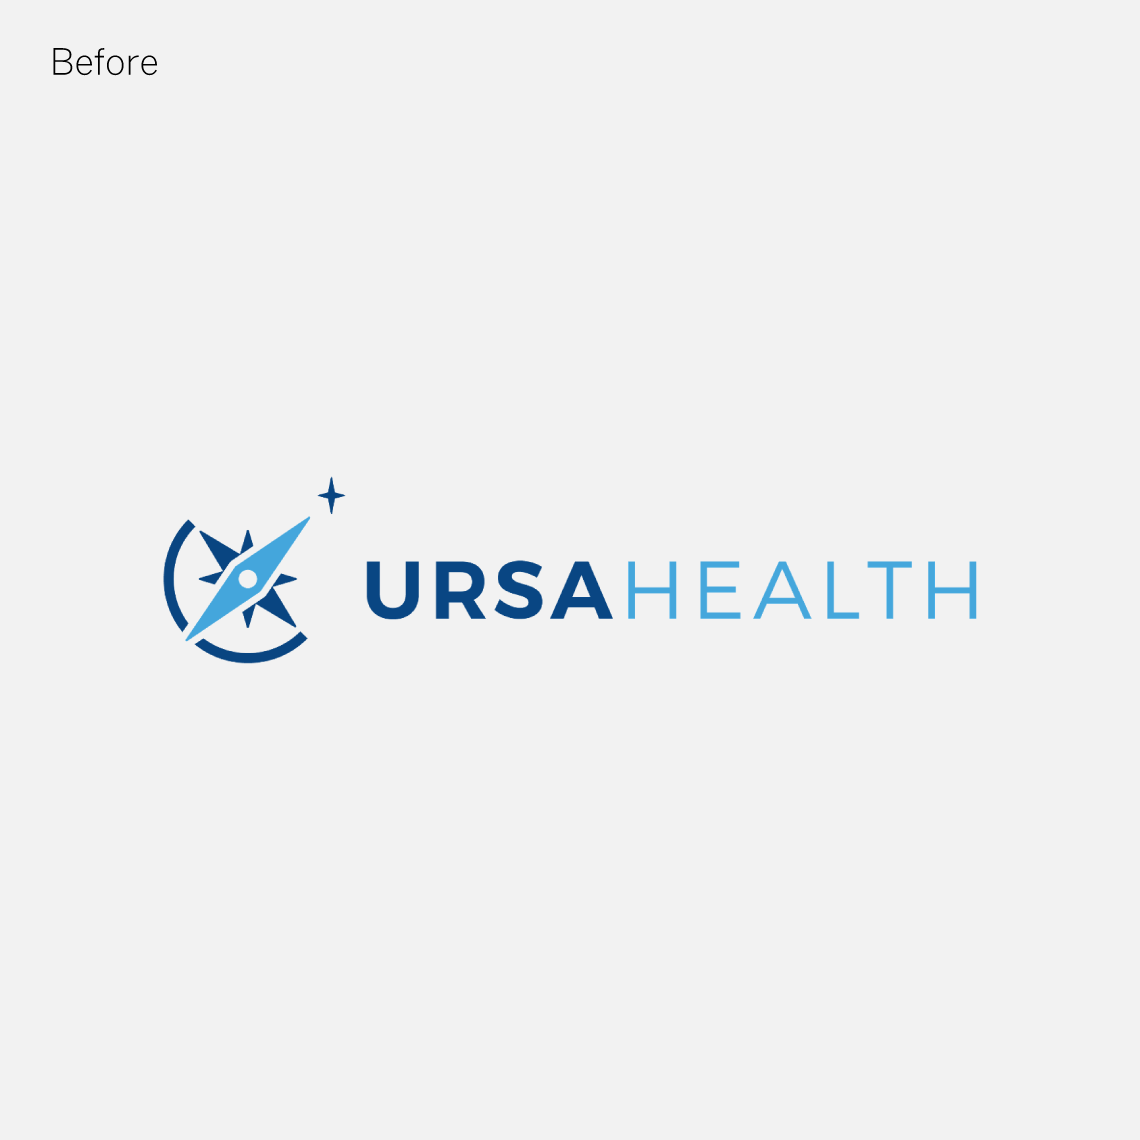 the old URSA HEALTH logo over light background